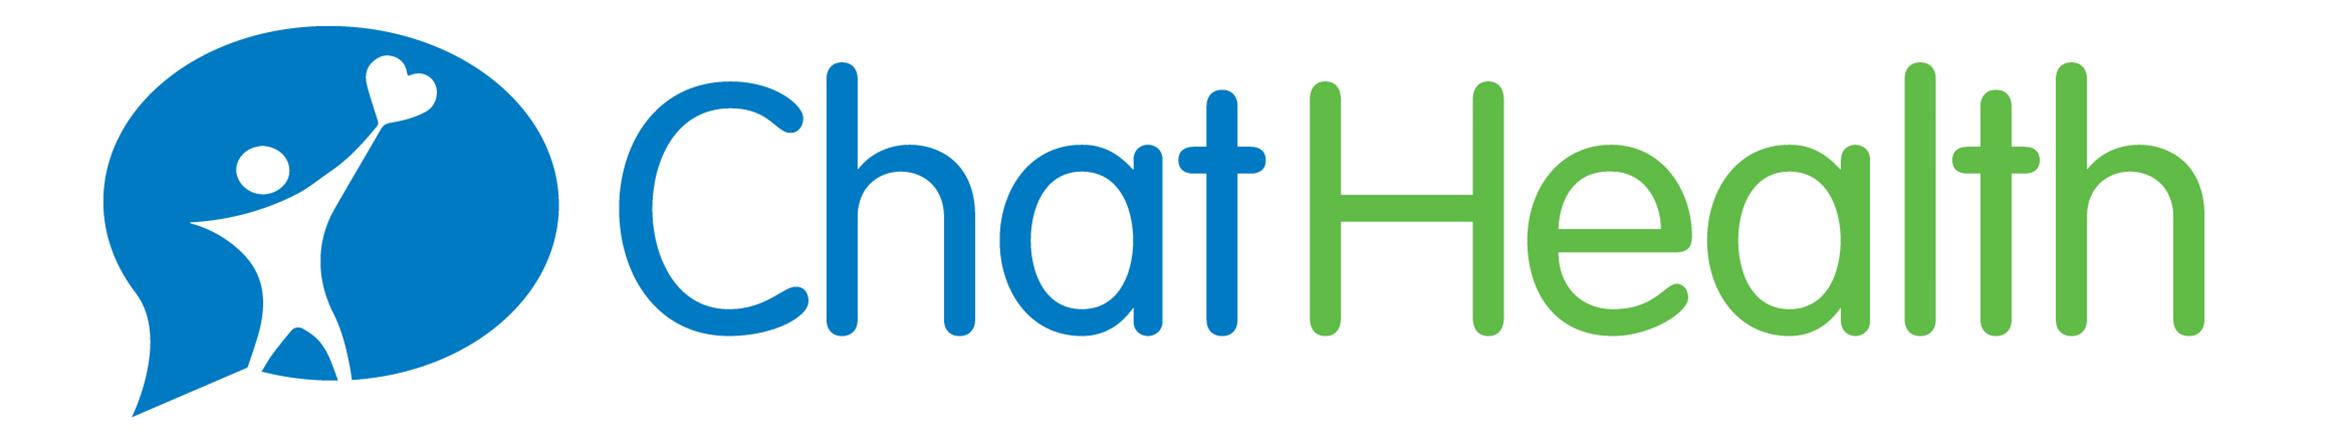 ChatHealth logo.jpg